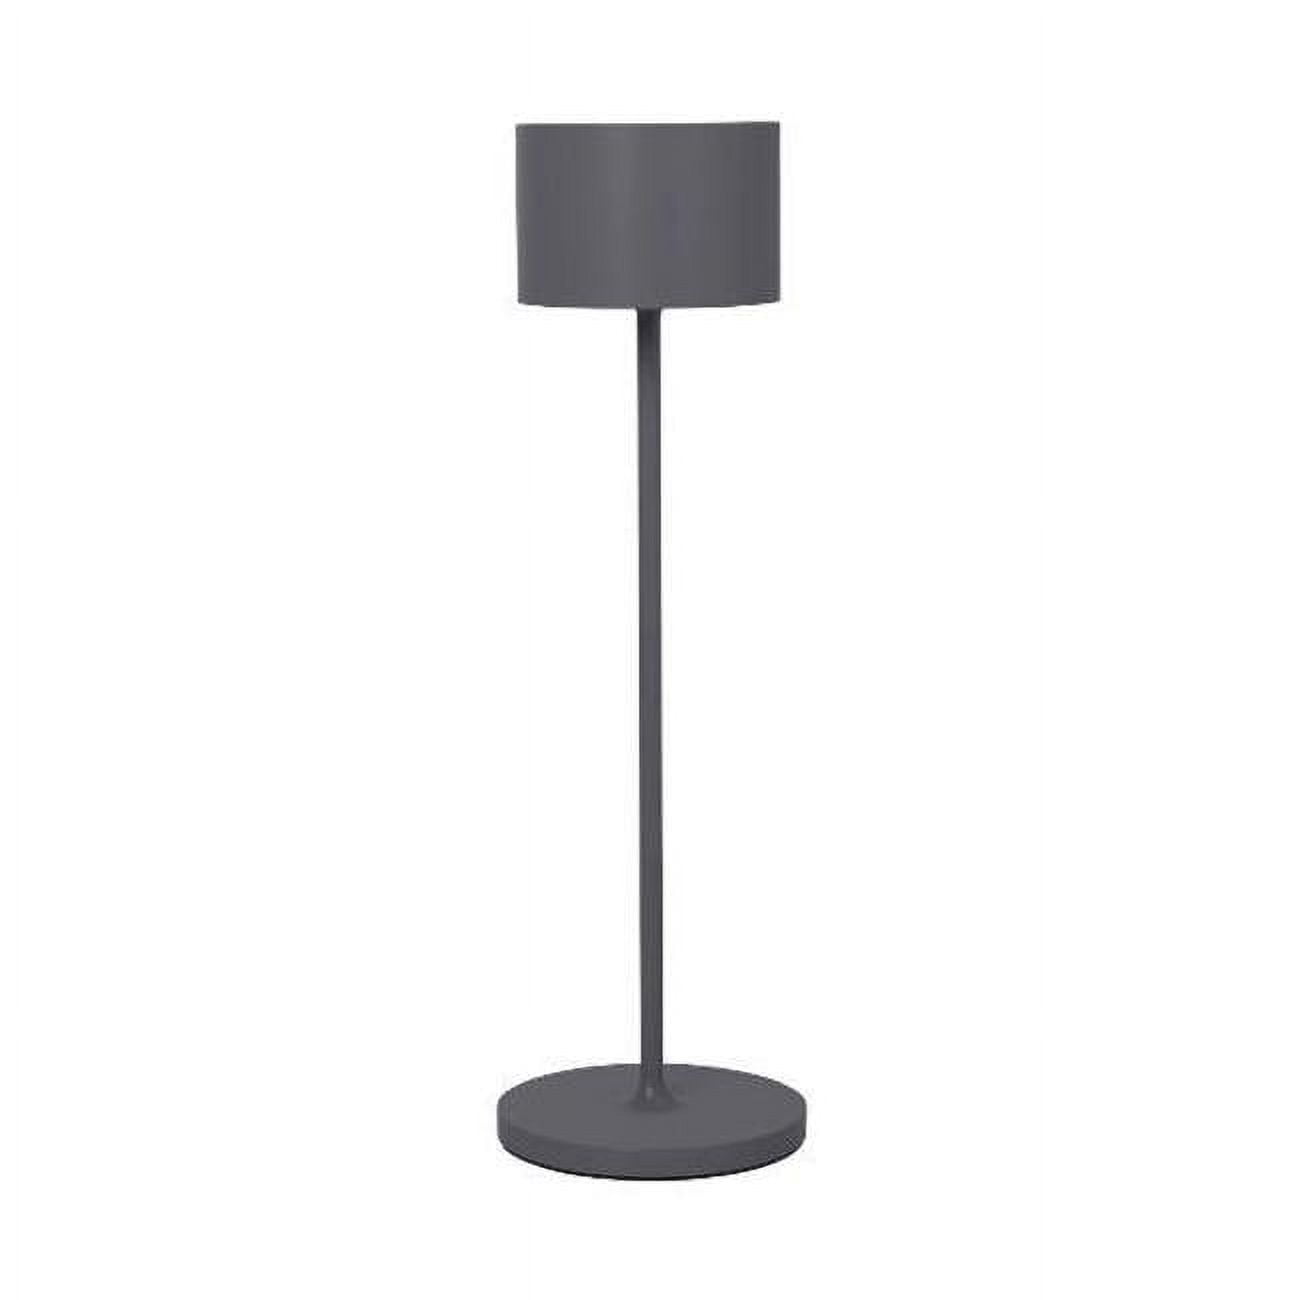 Picture of Blomus 66126 13.25 x 4.25 in. Farol Mobile Recharegable LED Lamp, Warm Grey